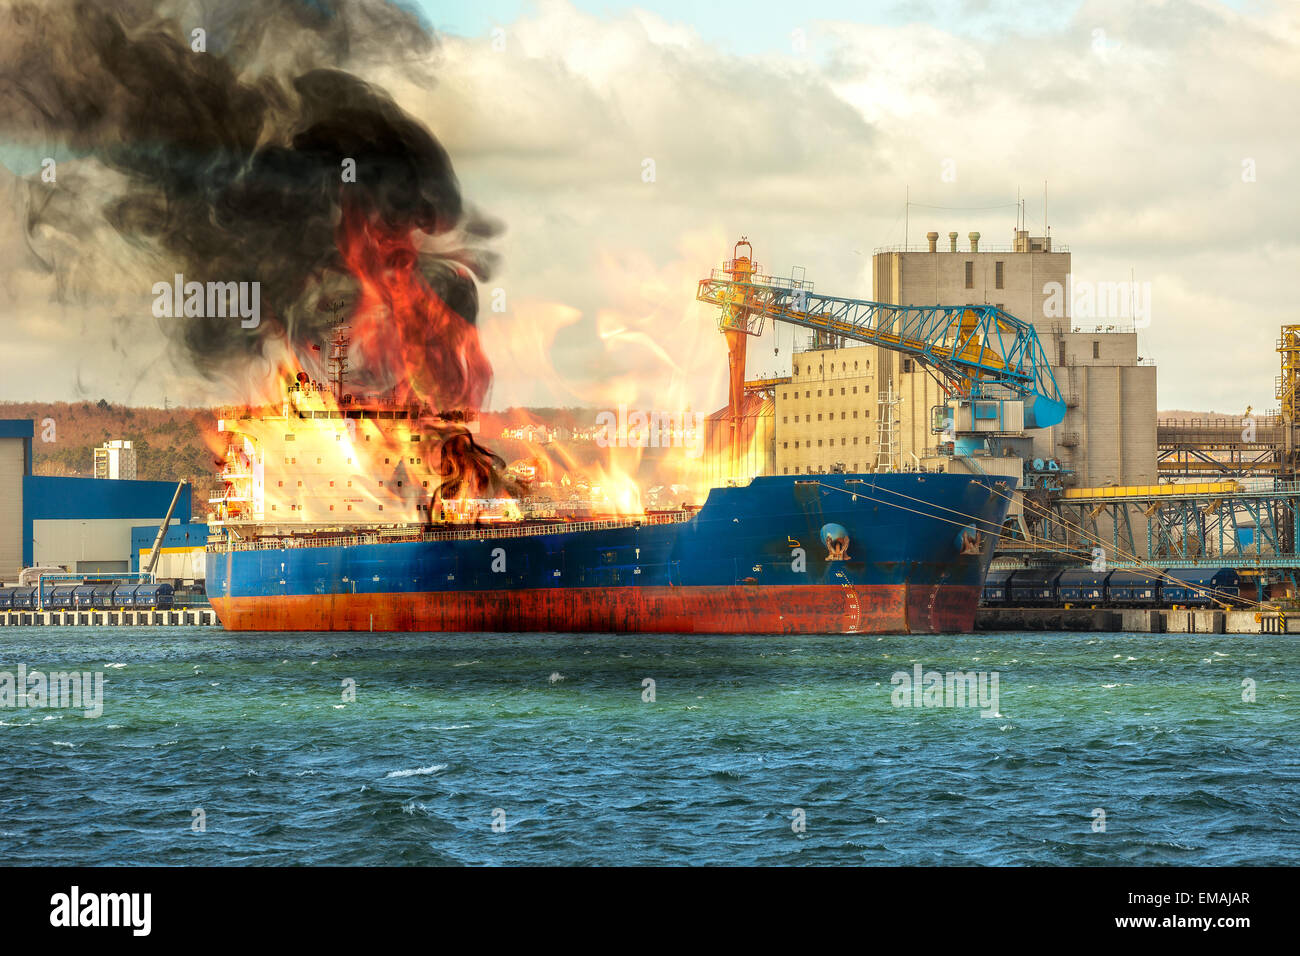 Burning cargo ship in the port. Stock Photo